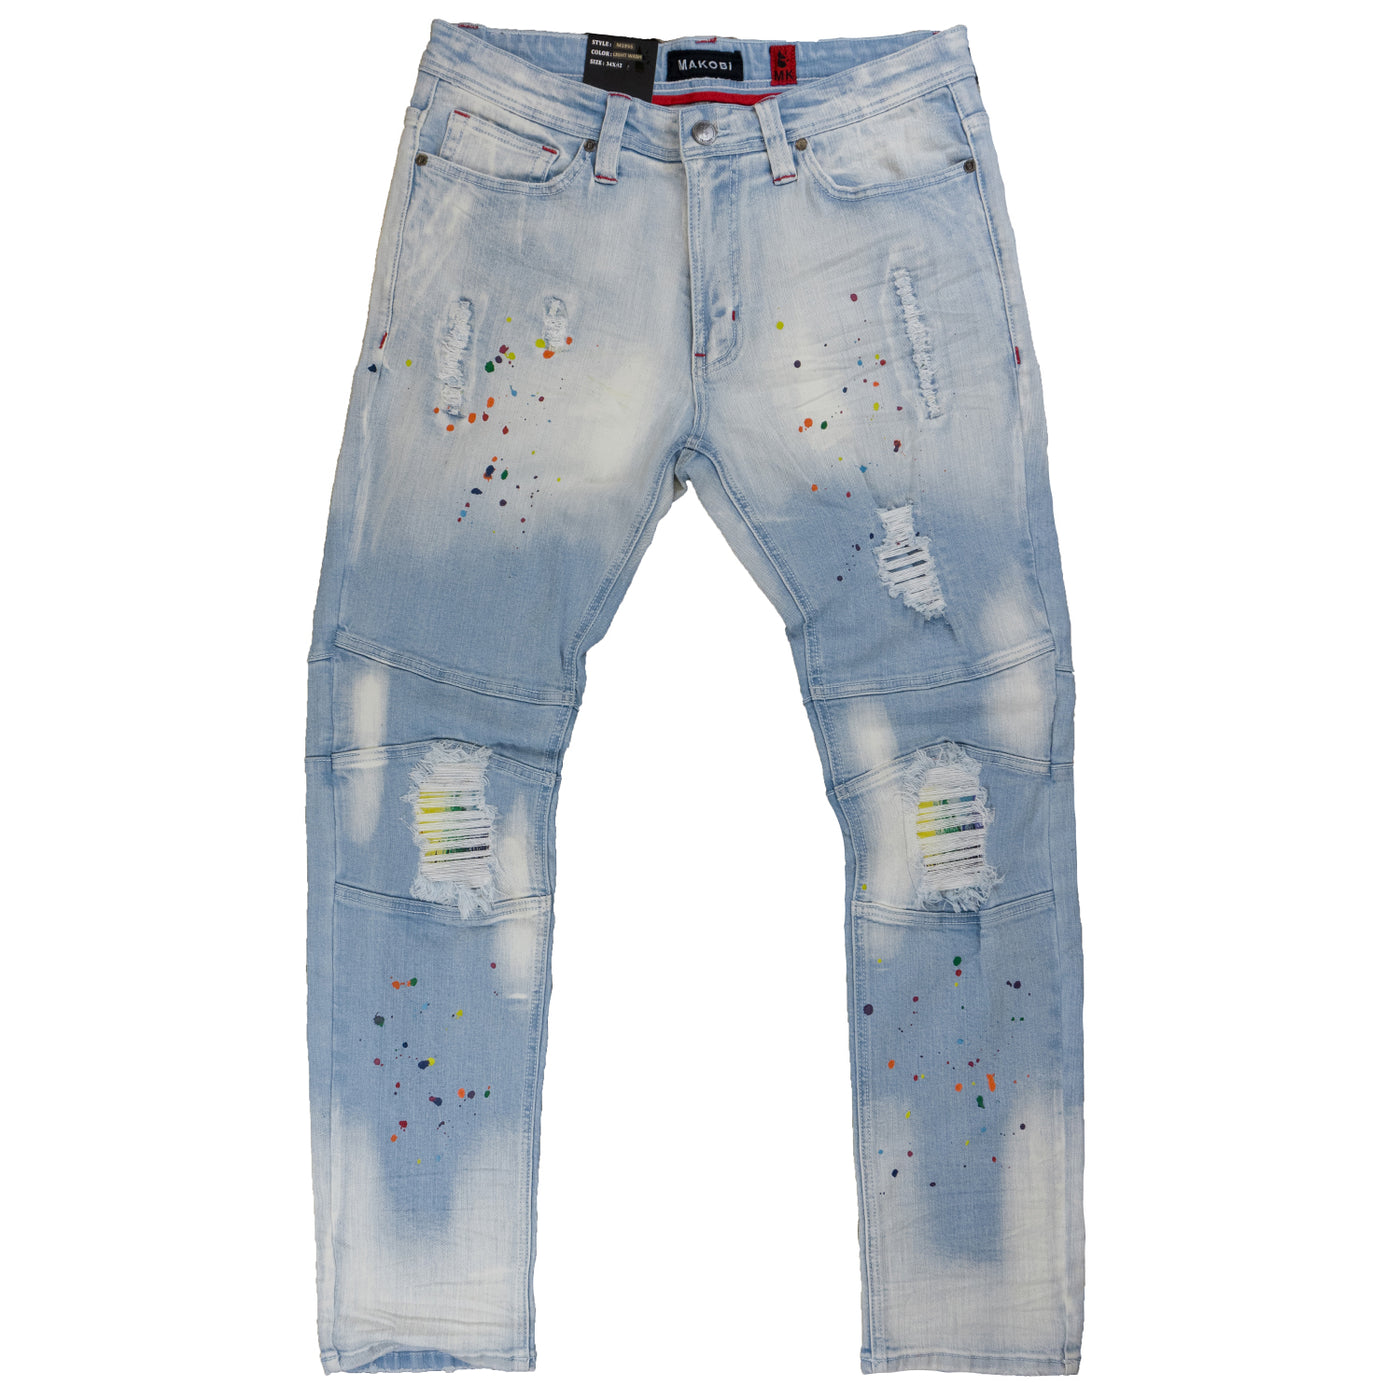 M1955 Makobi Denim Pants with Underlay & Paint Spots - Light Wash